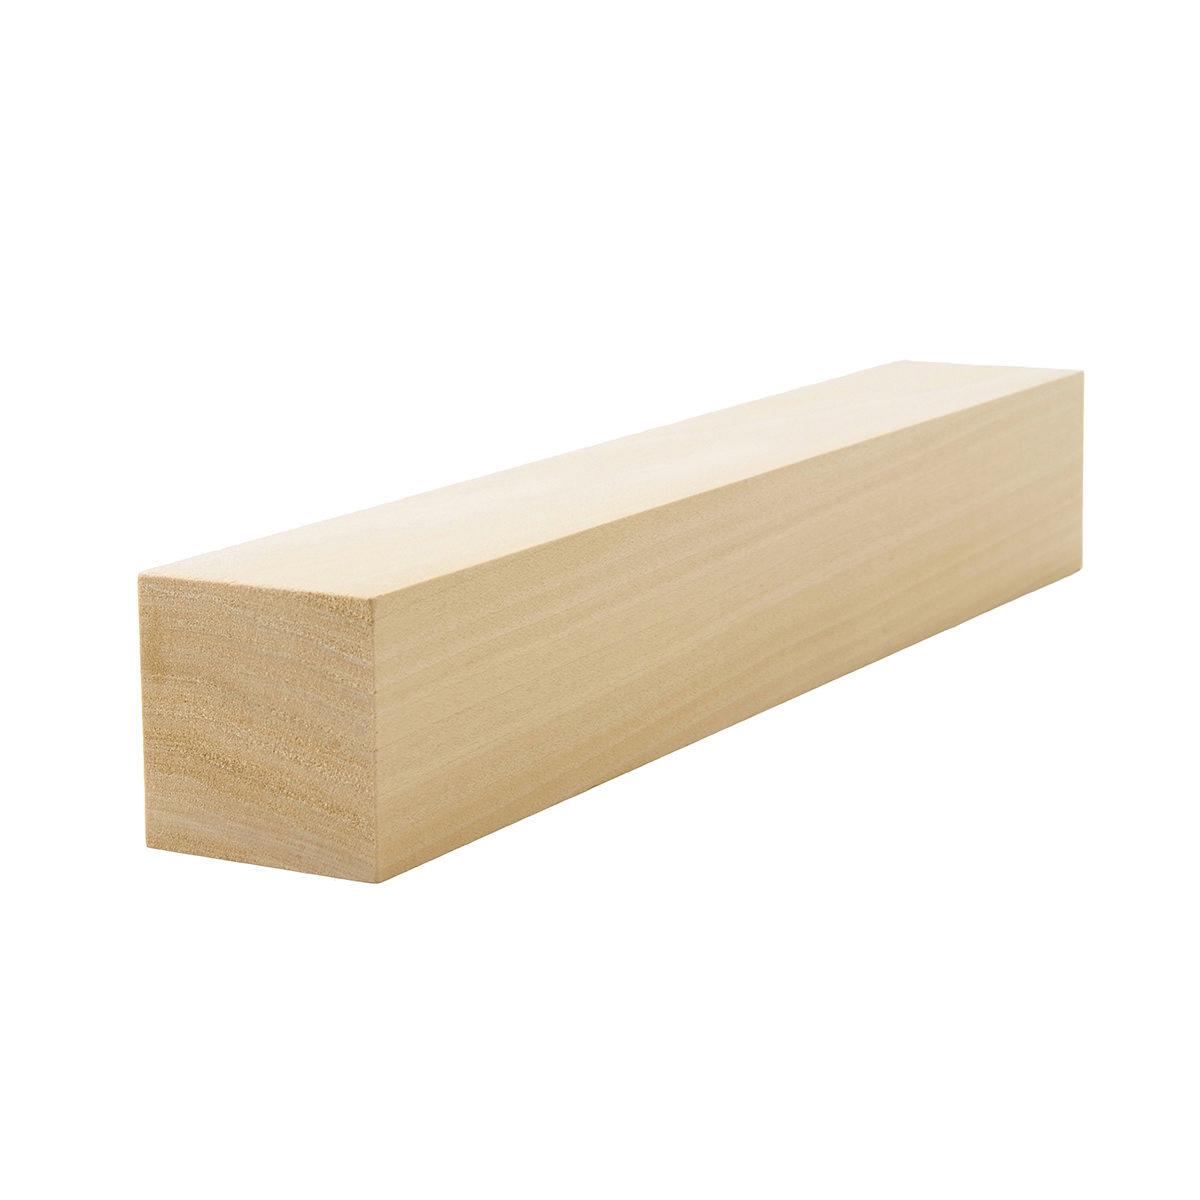 2x2 (13/4" x 13/4") Poplar S4S Lumber & Square Stock